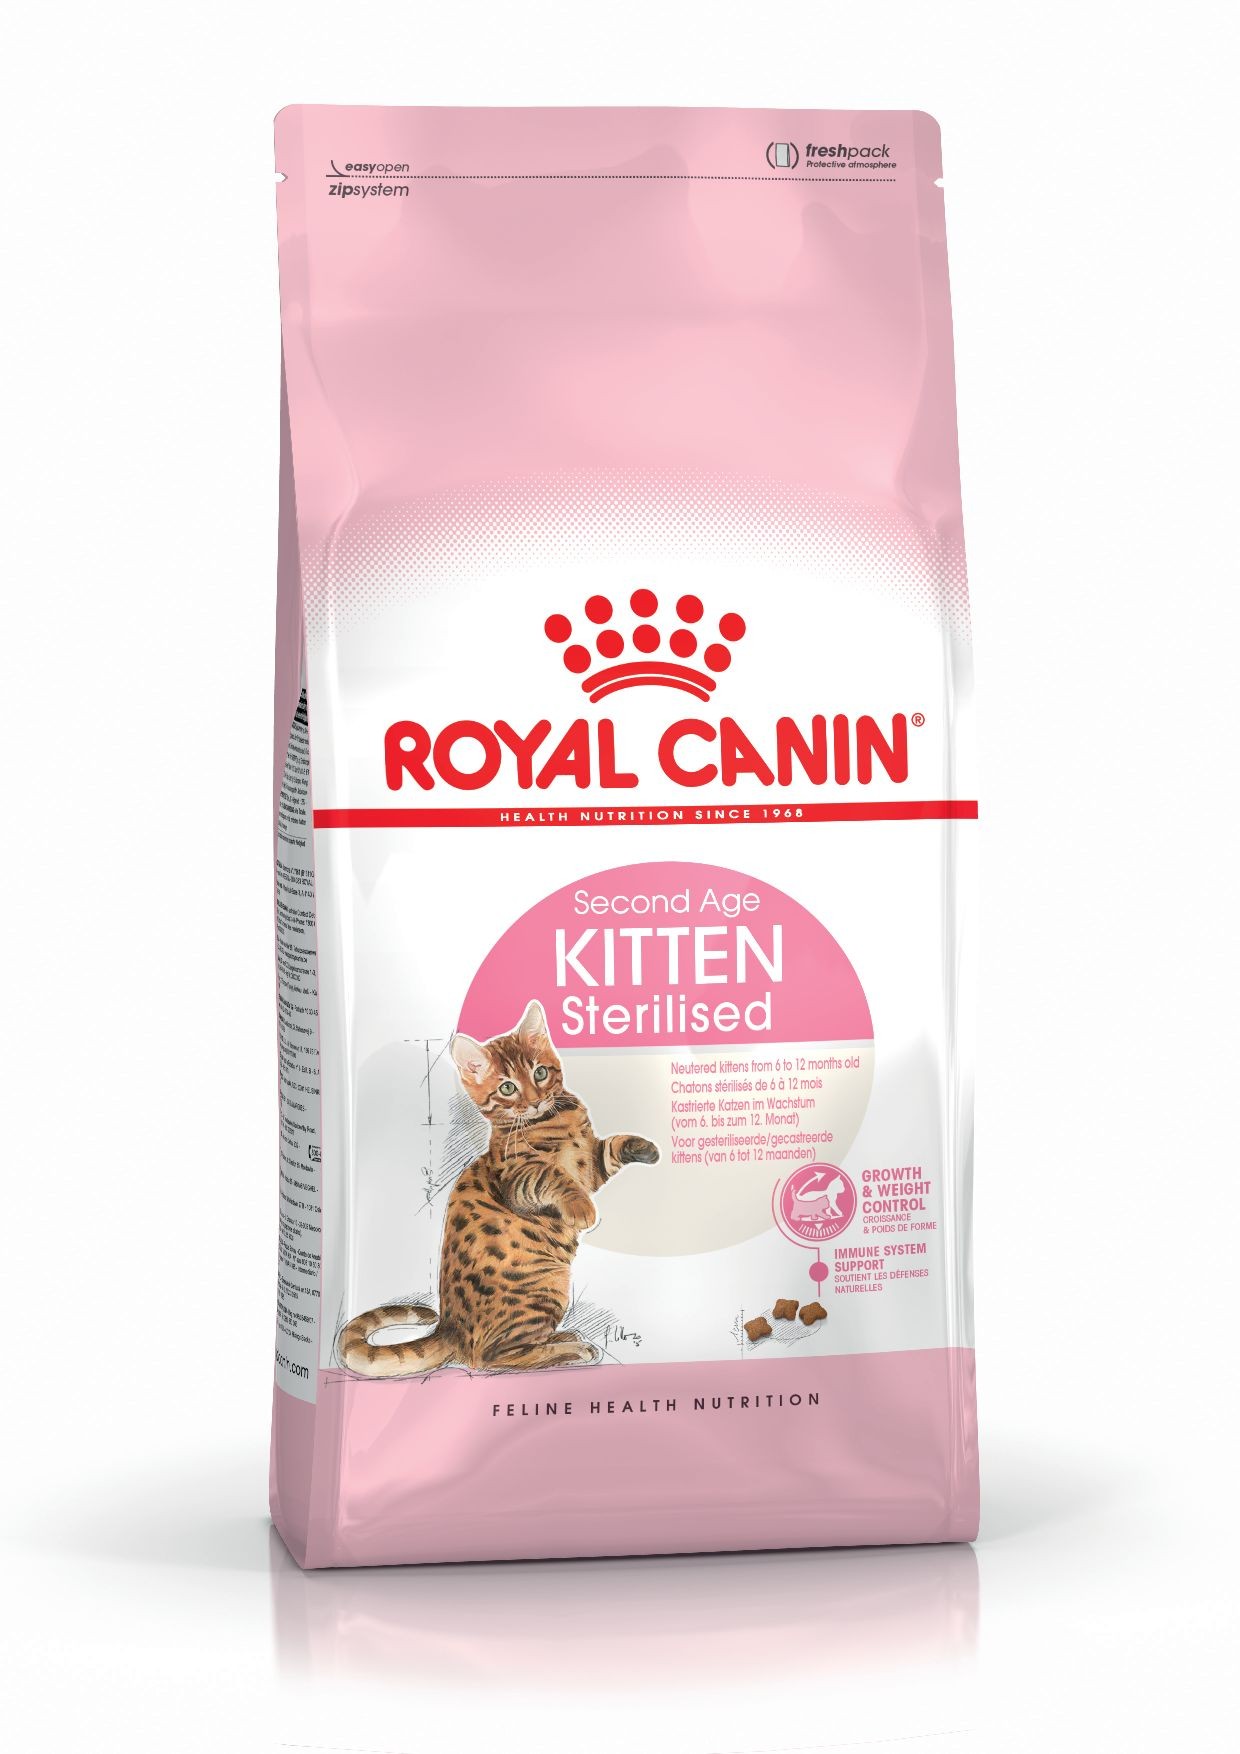 Royal Canin Kitten Sterilised Dry Food in Sharjah, Dubai